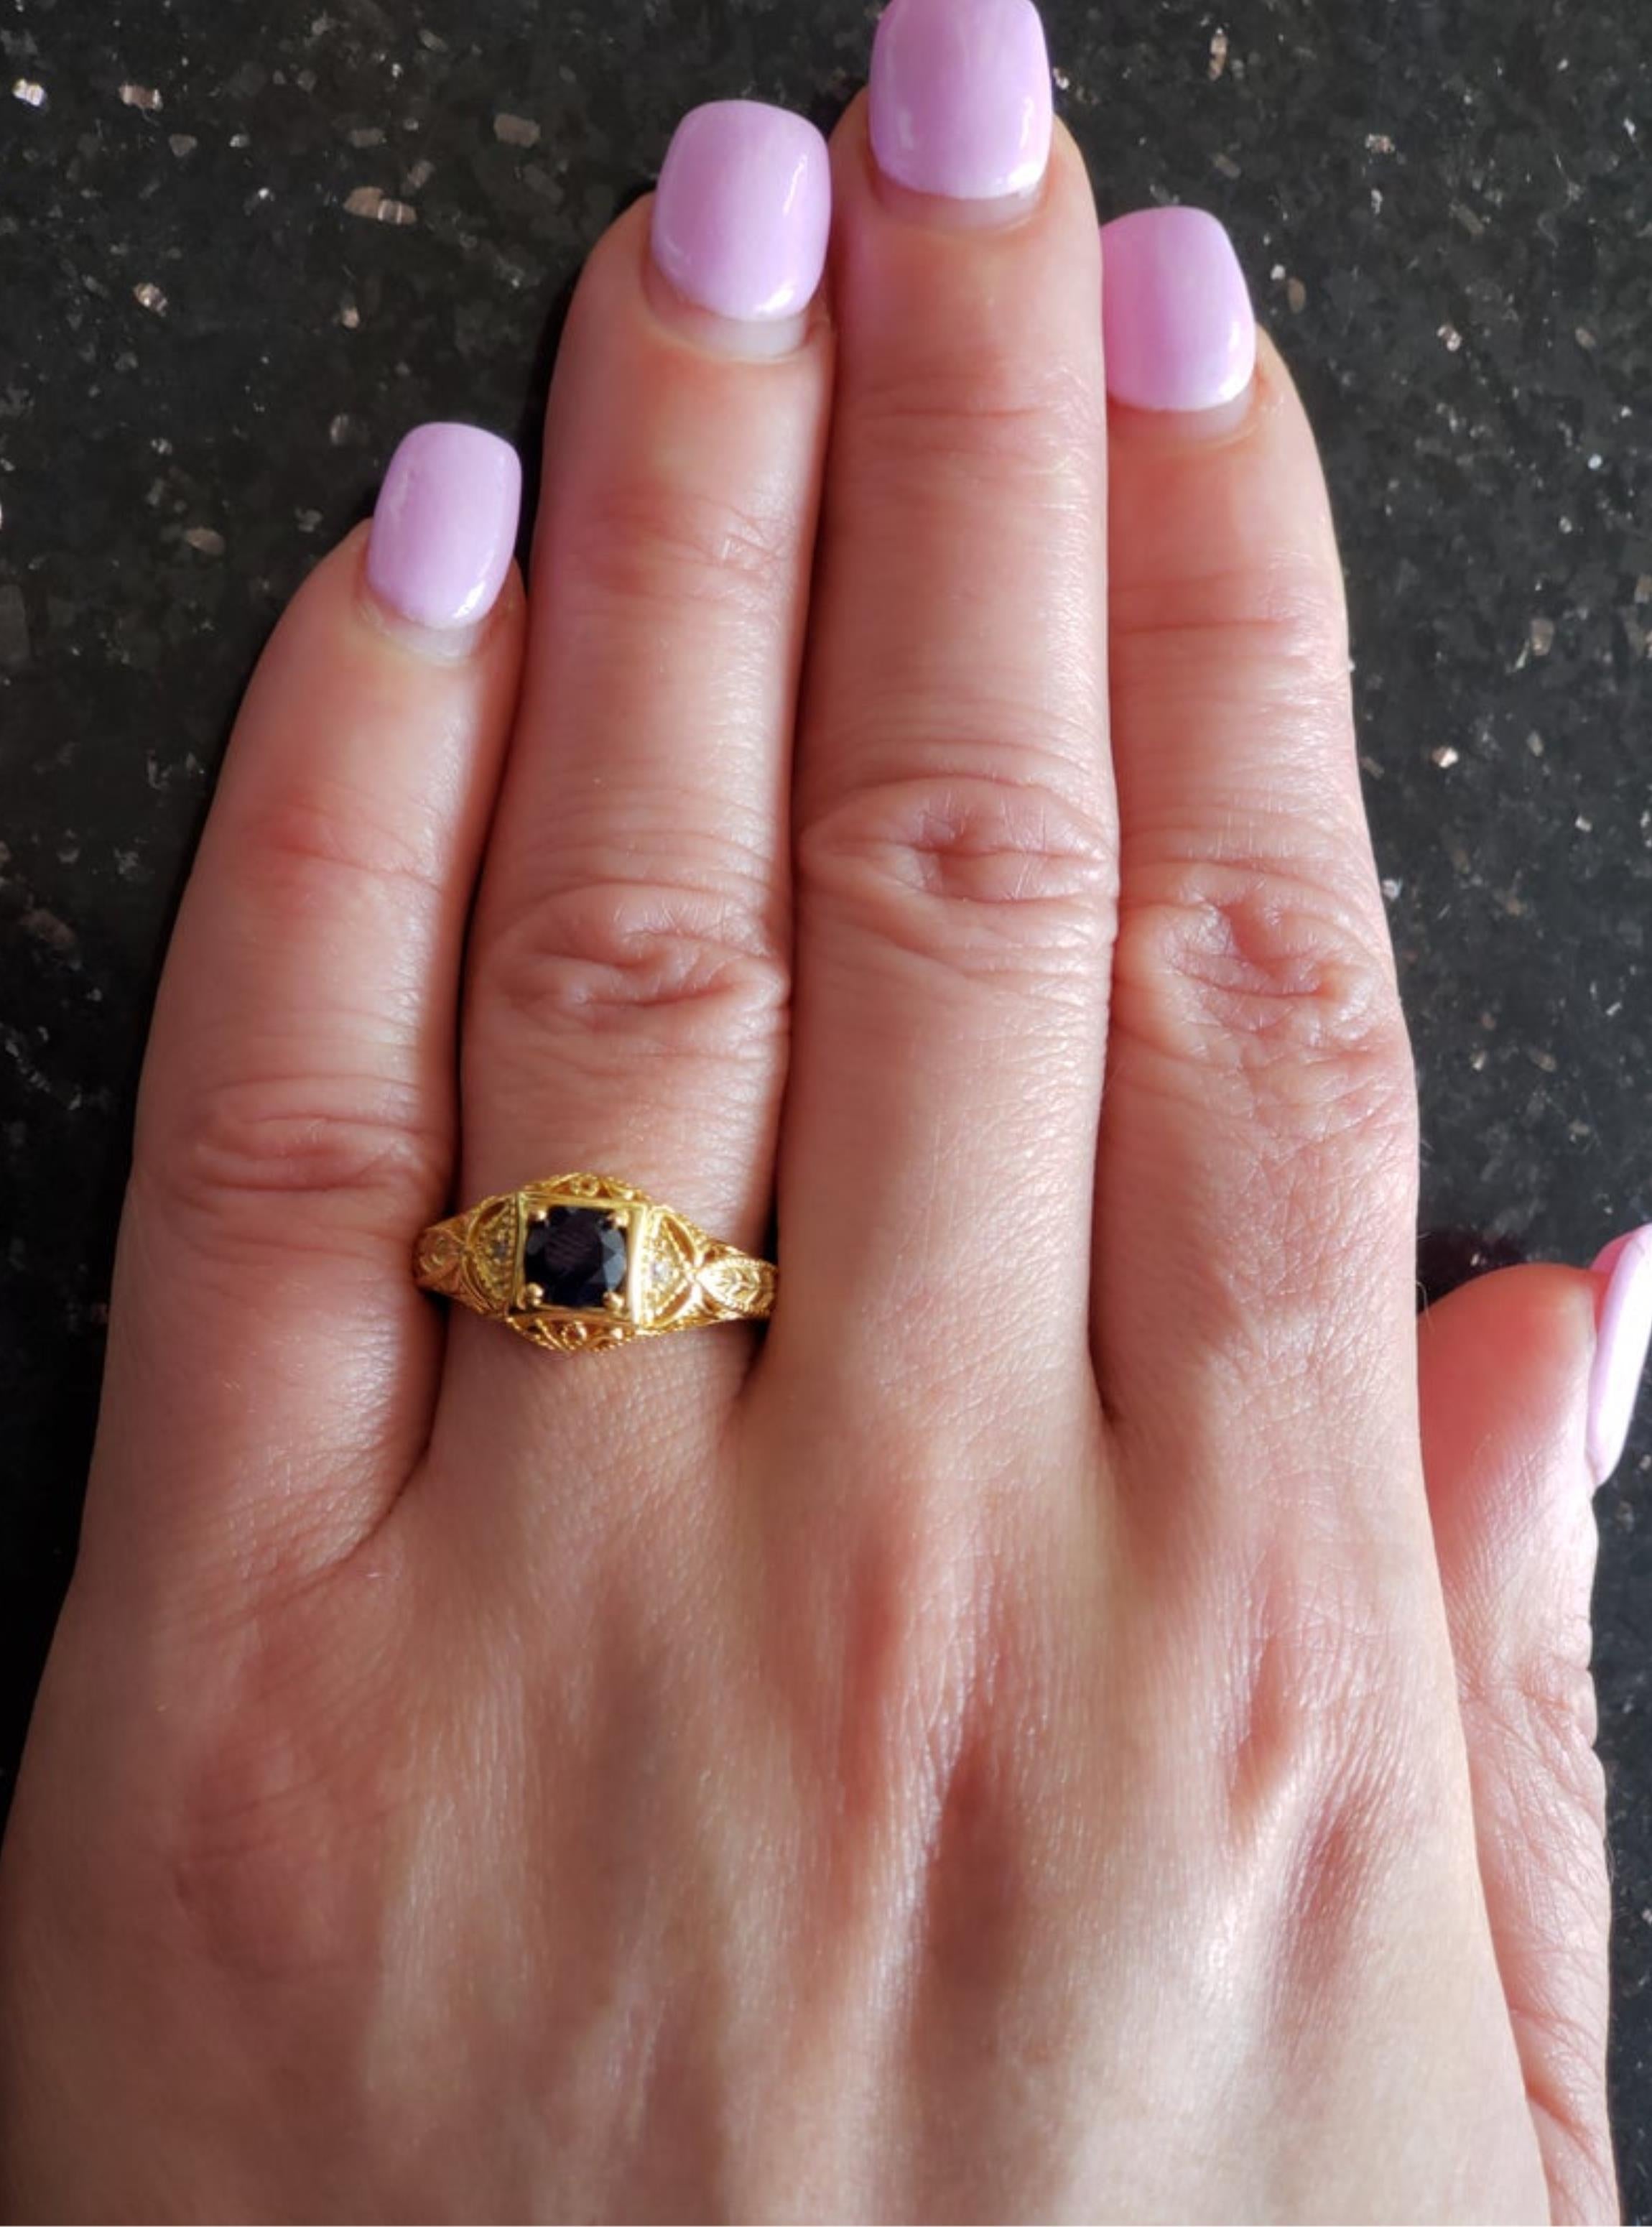 14Kt Gold Genuine Black Onyx & Diamond Design Round Ring